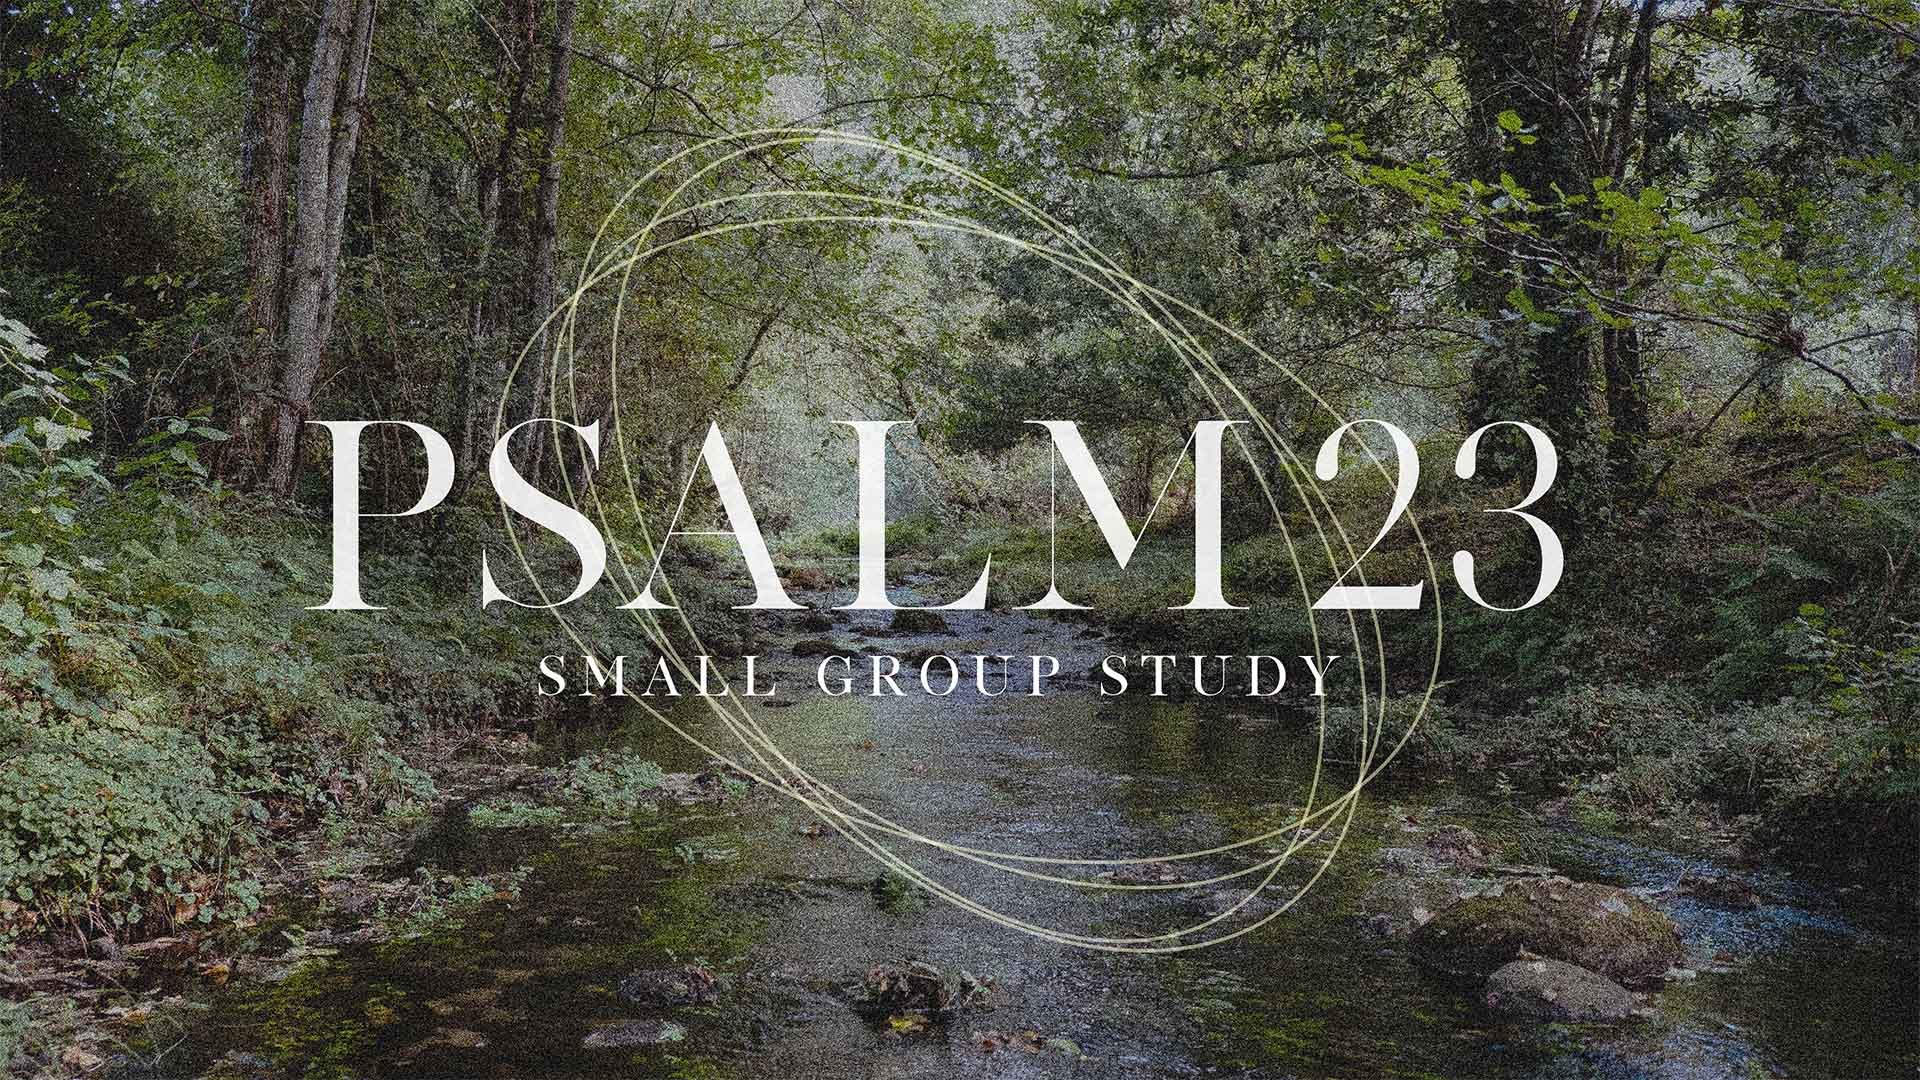 Psalm 23 copy.jpg